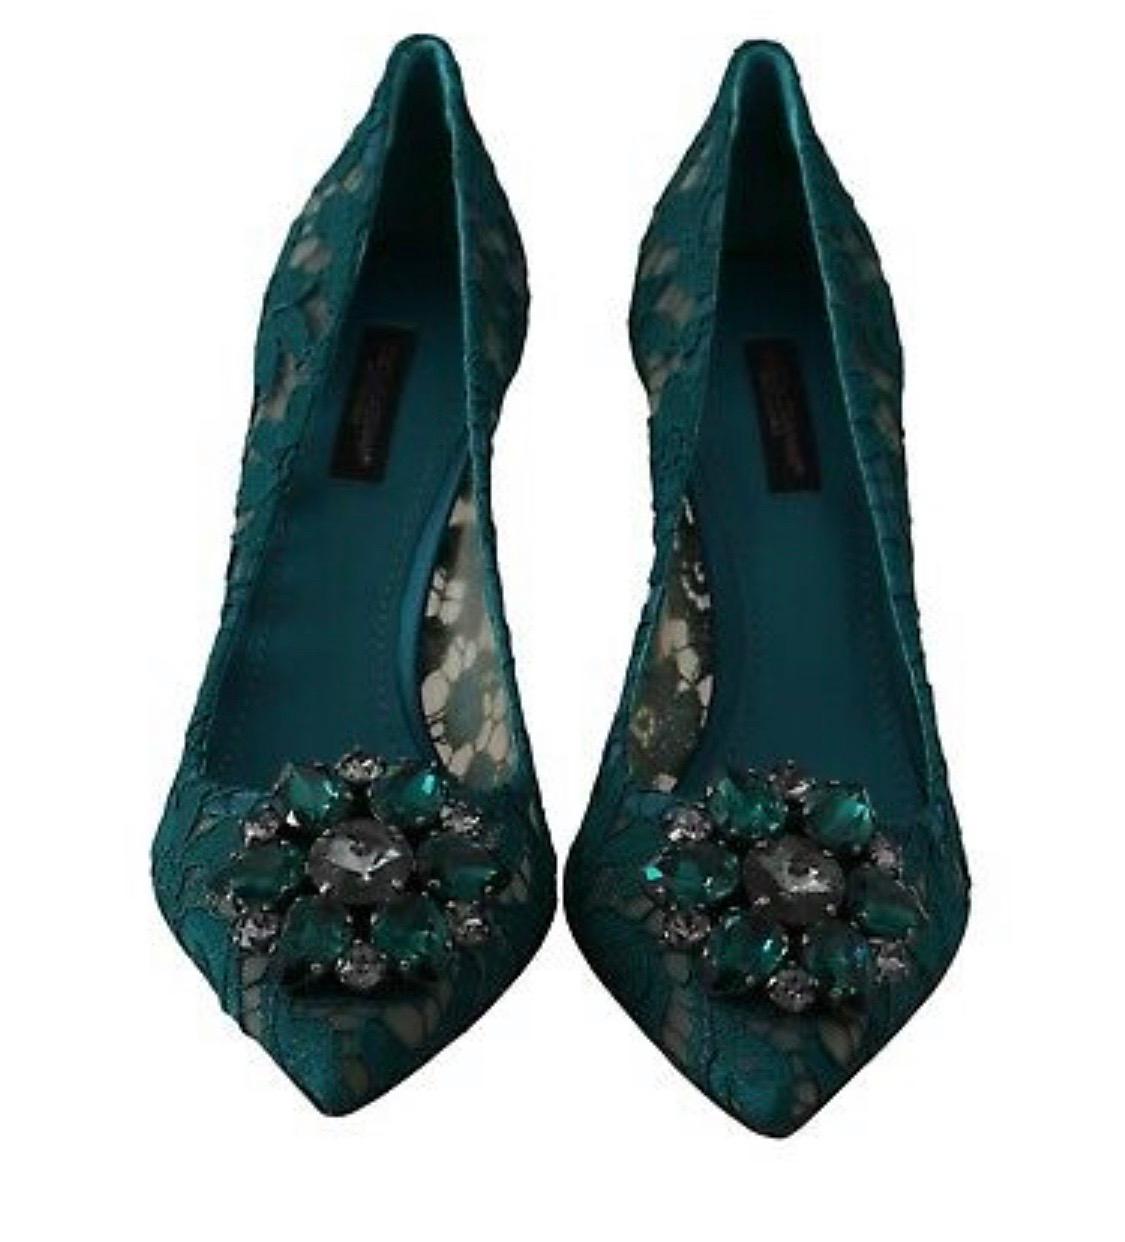 Black Dolce & Gabbana Bellucci Pumps Shoes Green Lace Crystals Heels 